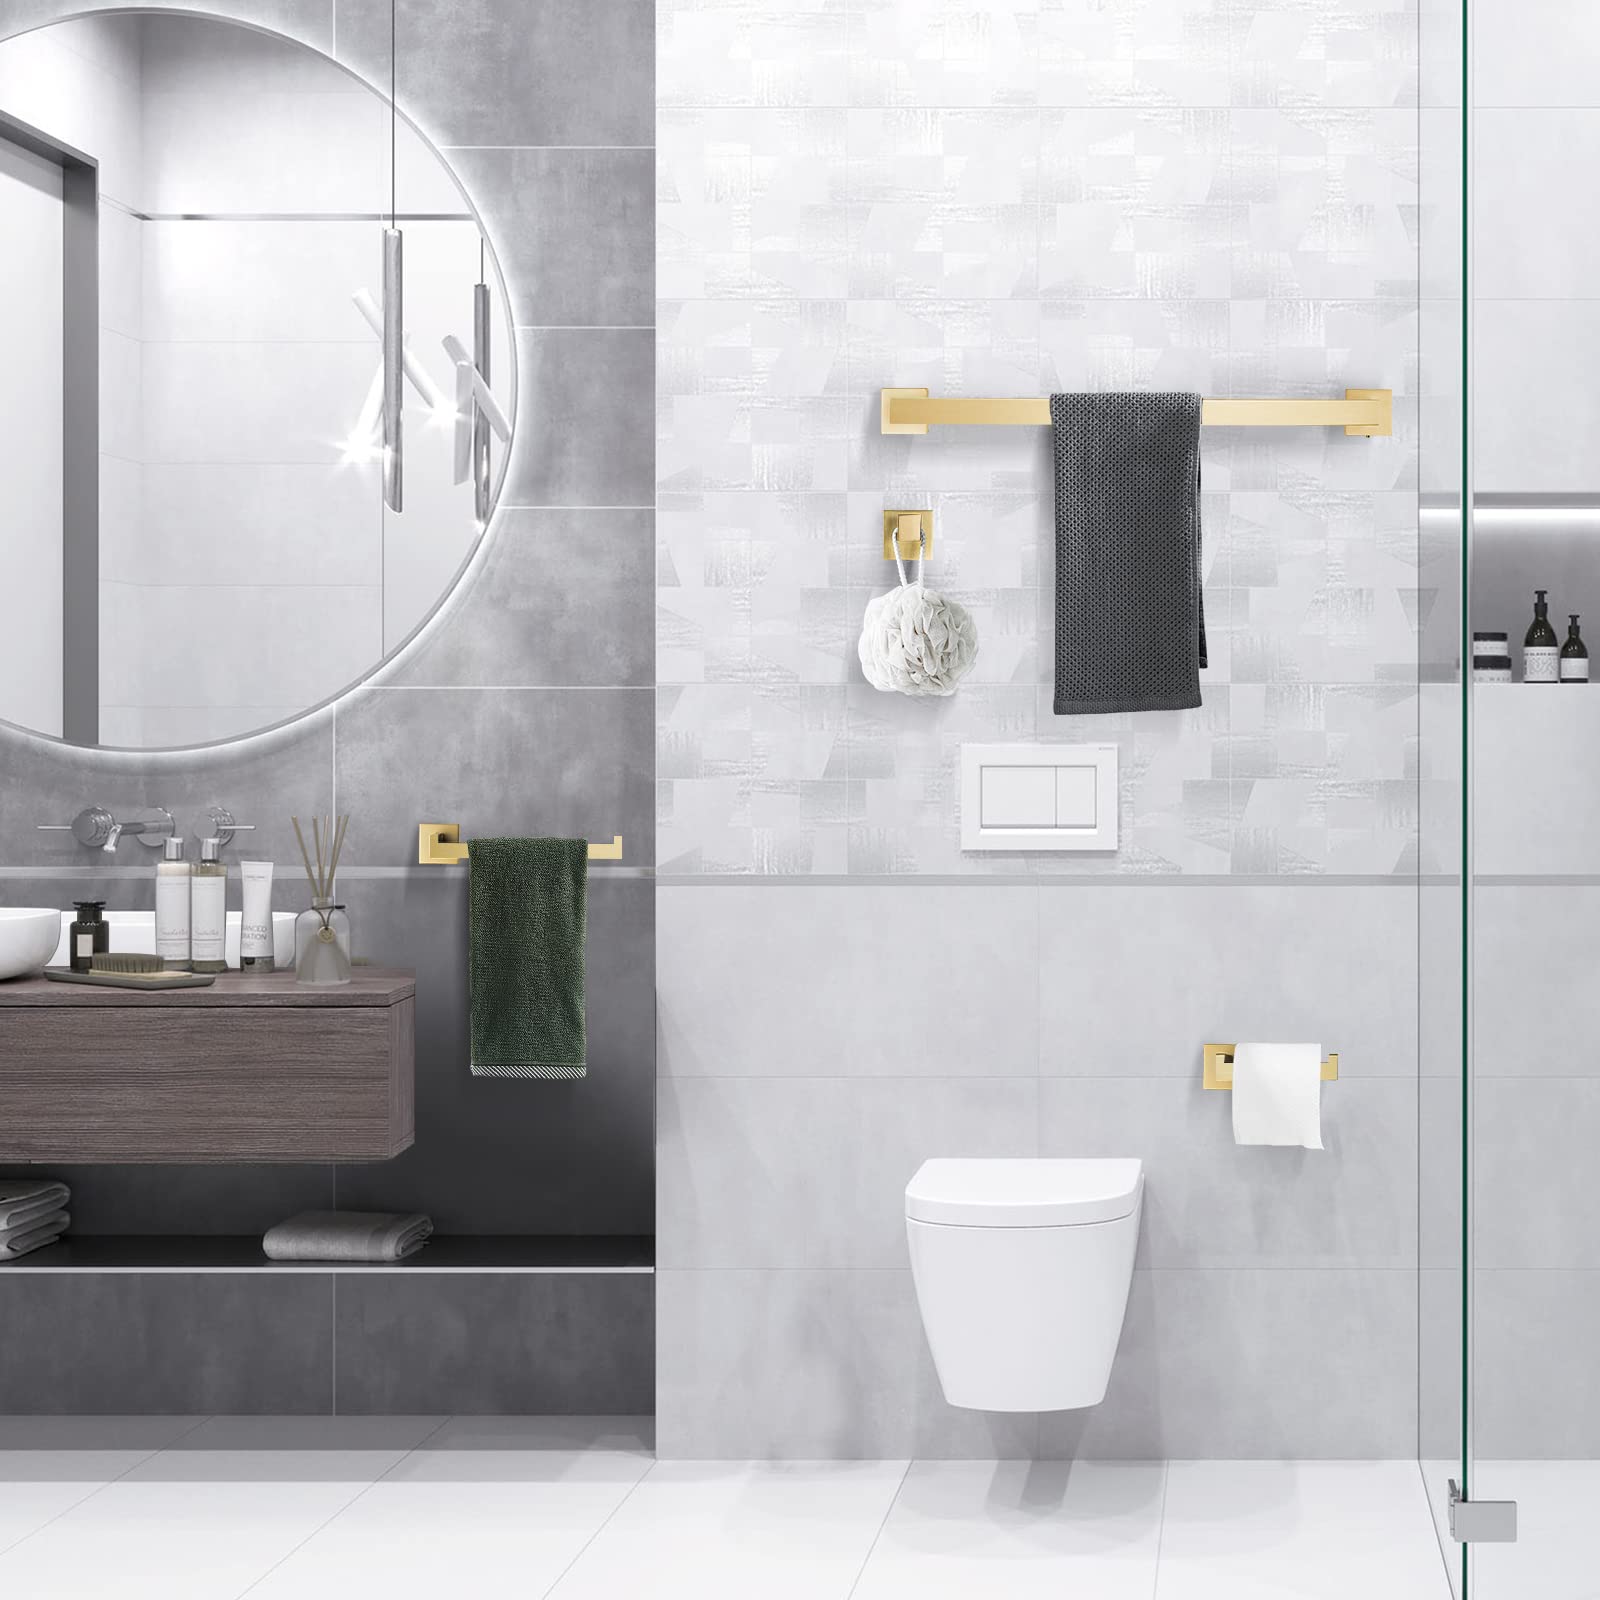 TURS Brushed Gold Single Towel Bar Stainless Steel Bathroom Towel Holder Rail Wall Mounted Towel Rack